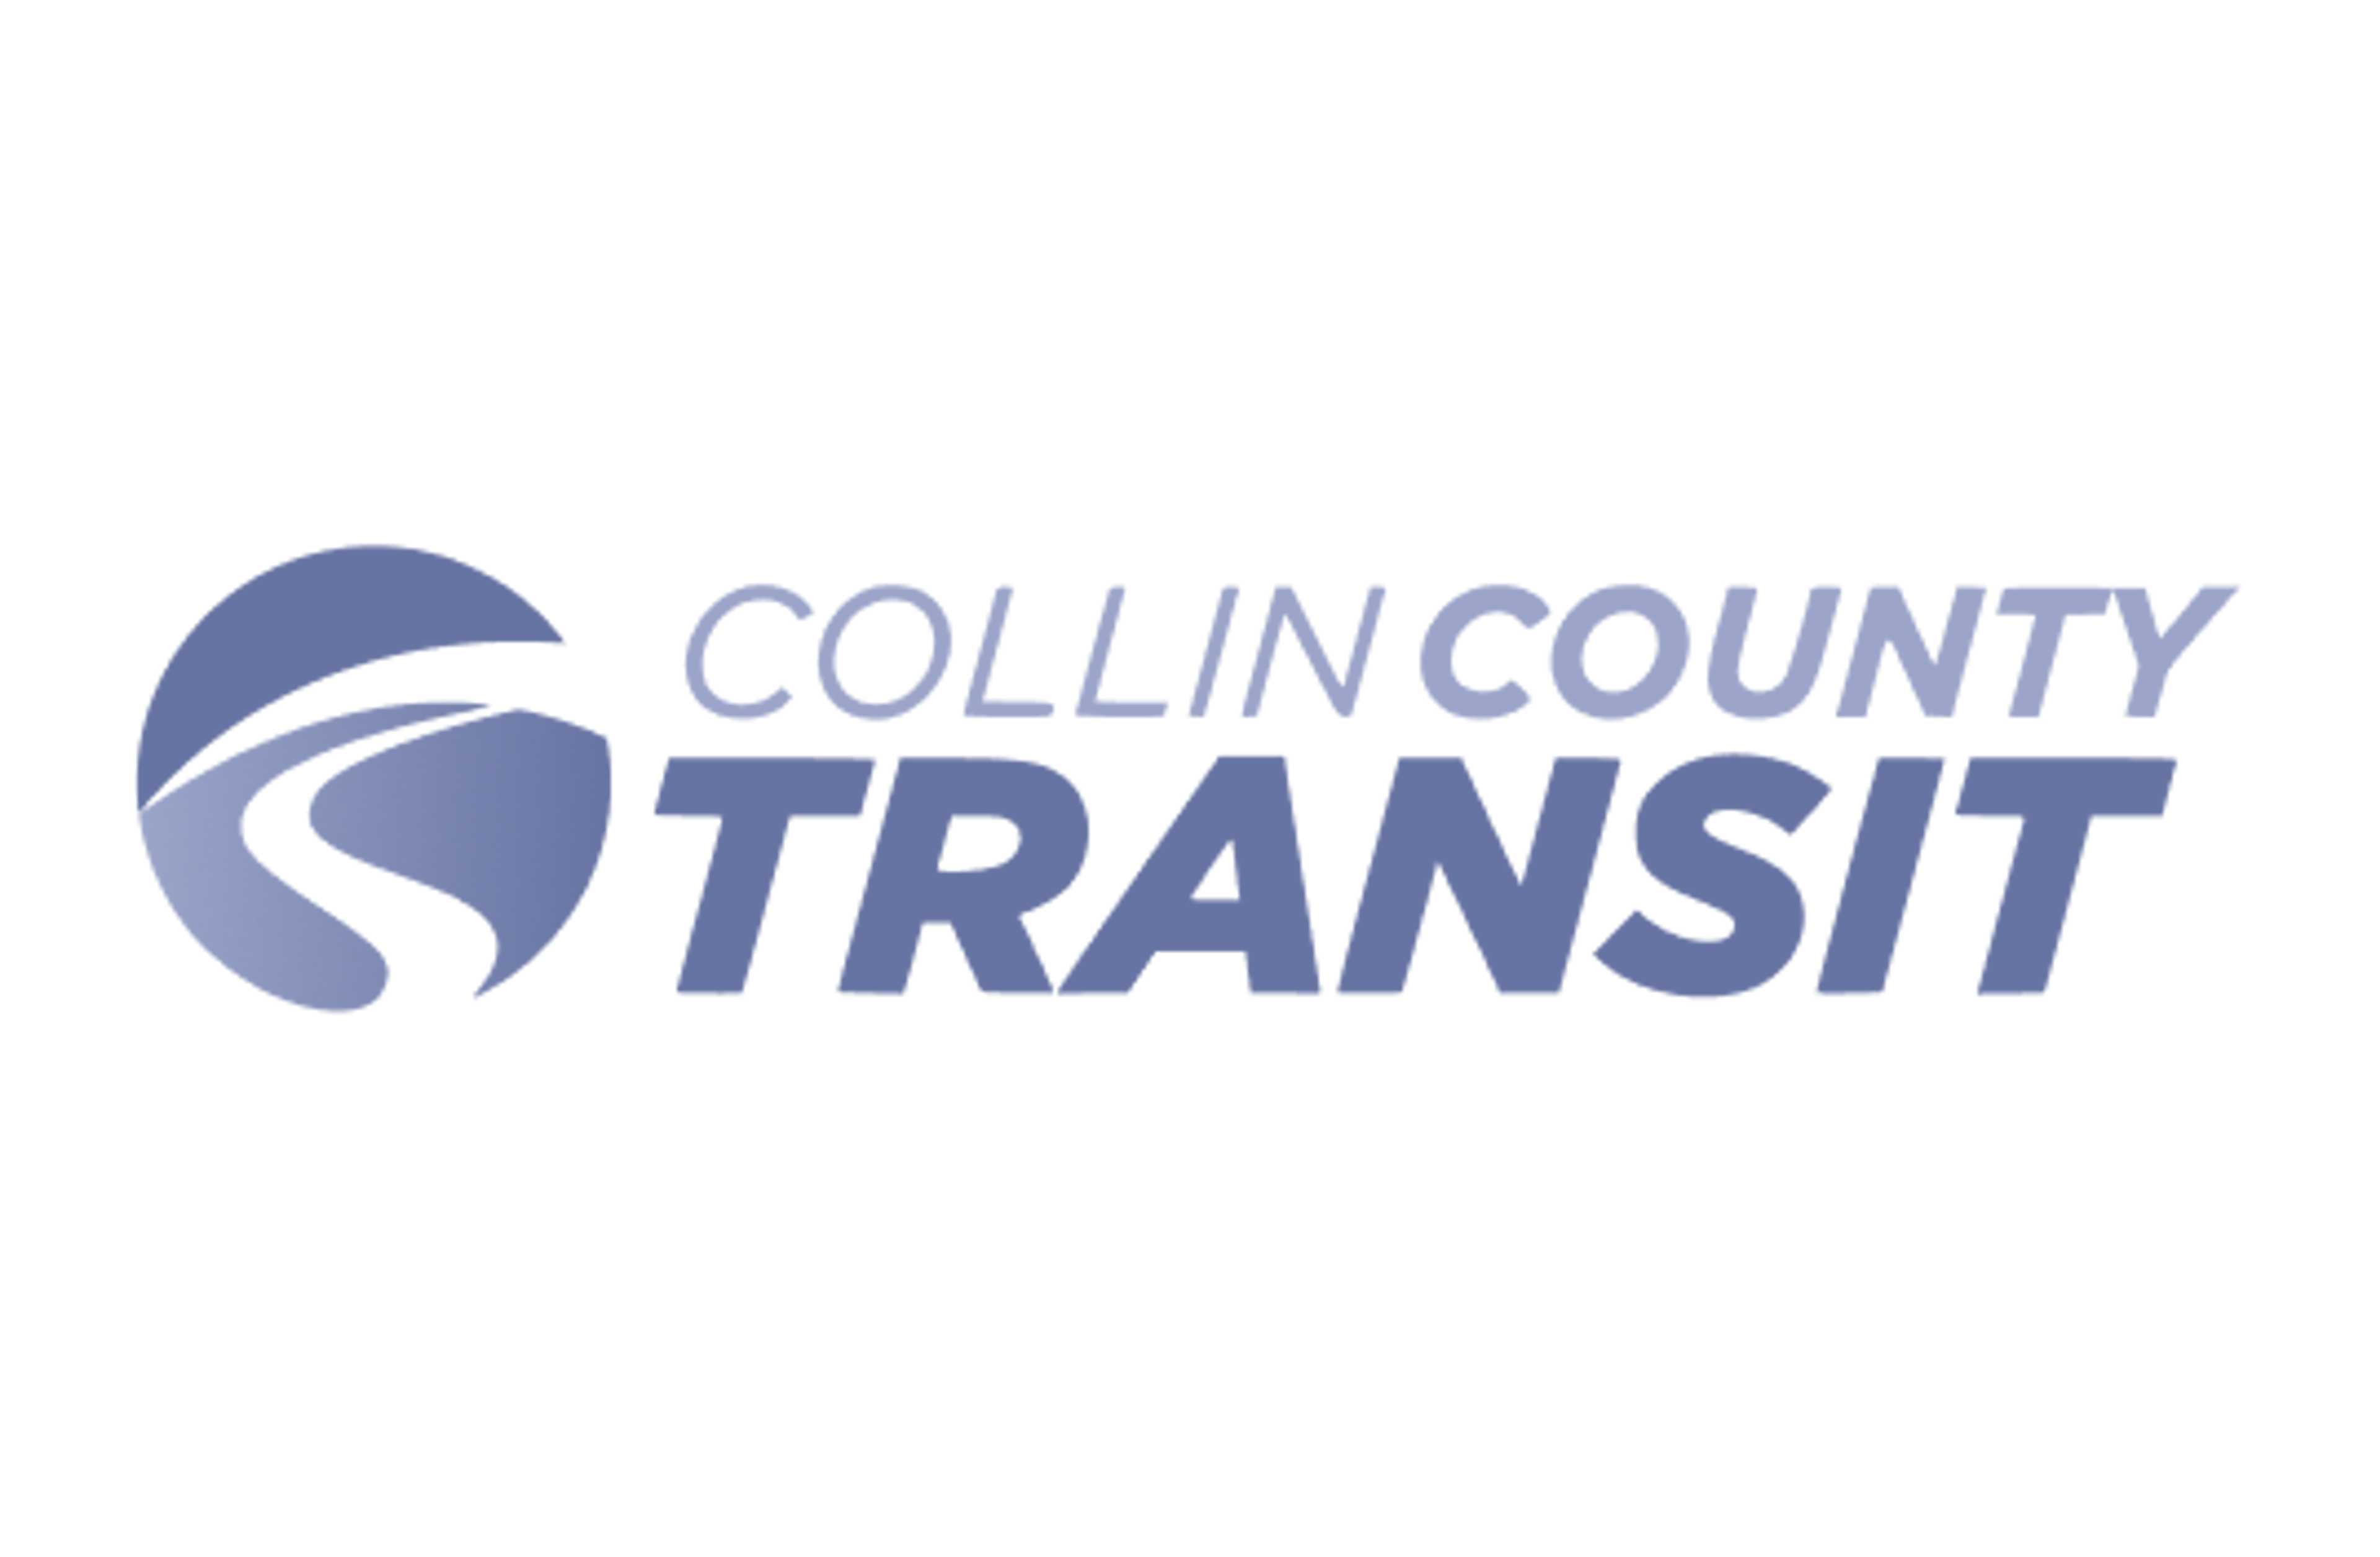 Colin County Transit logo